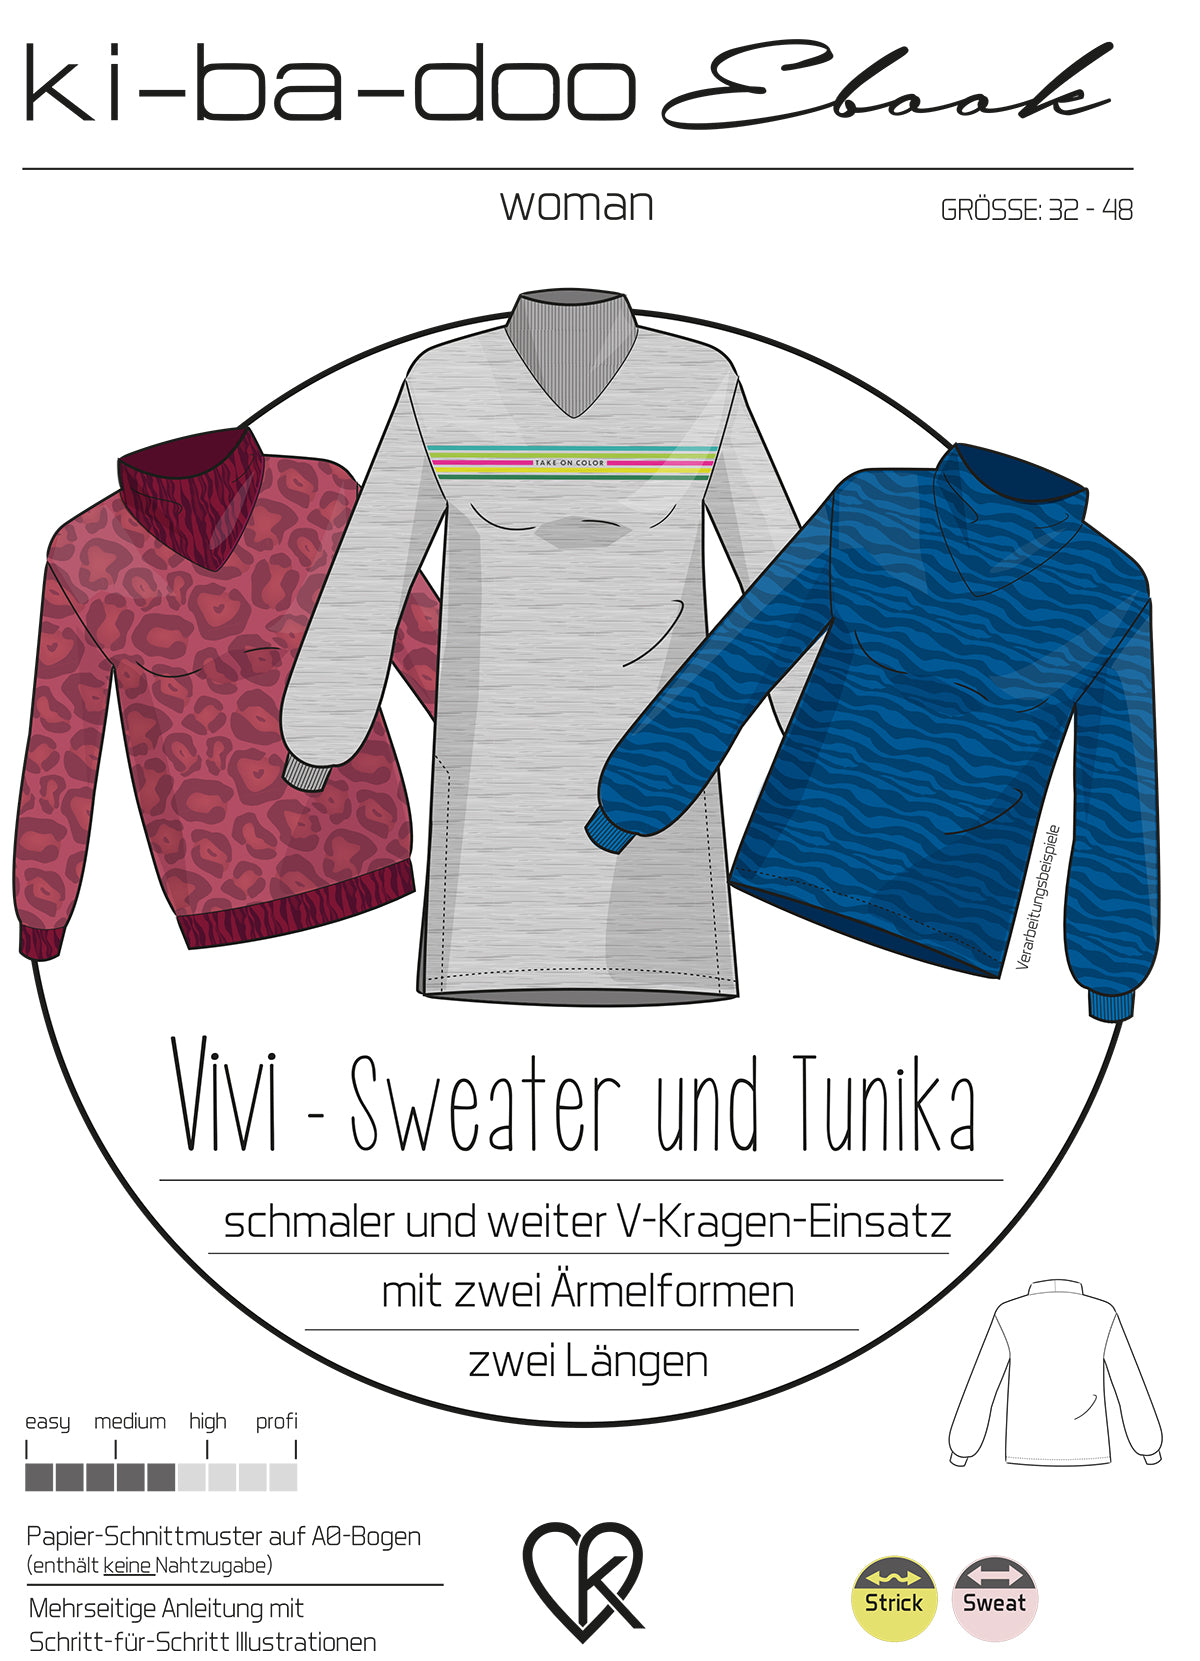 ebook Sweater Größe download – A4 zum Vivi DIN Ki-ba-doo | PDF 32-48